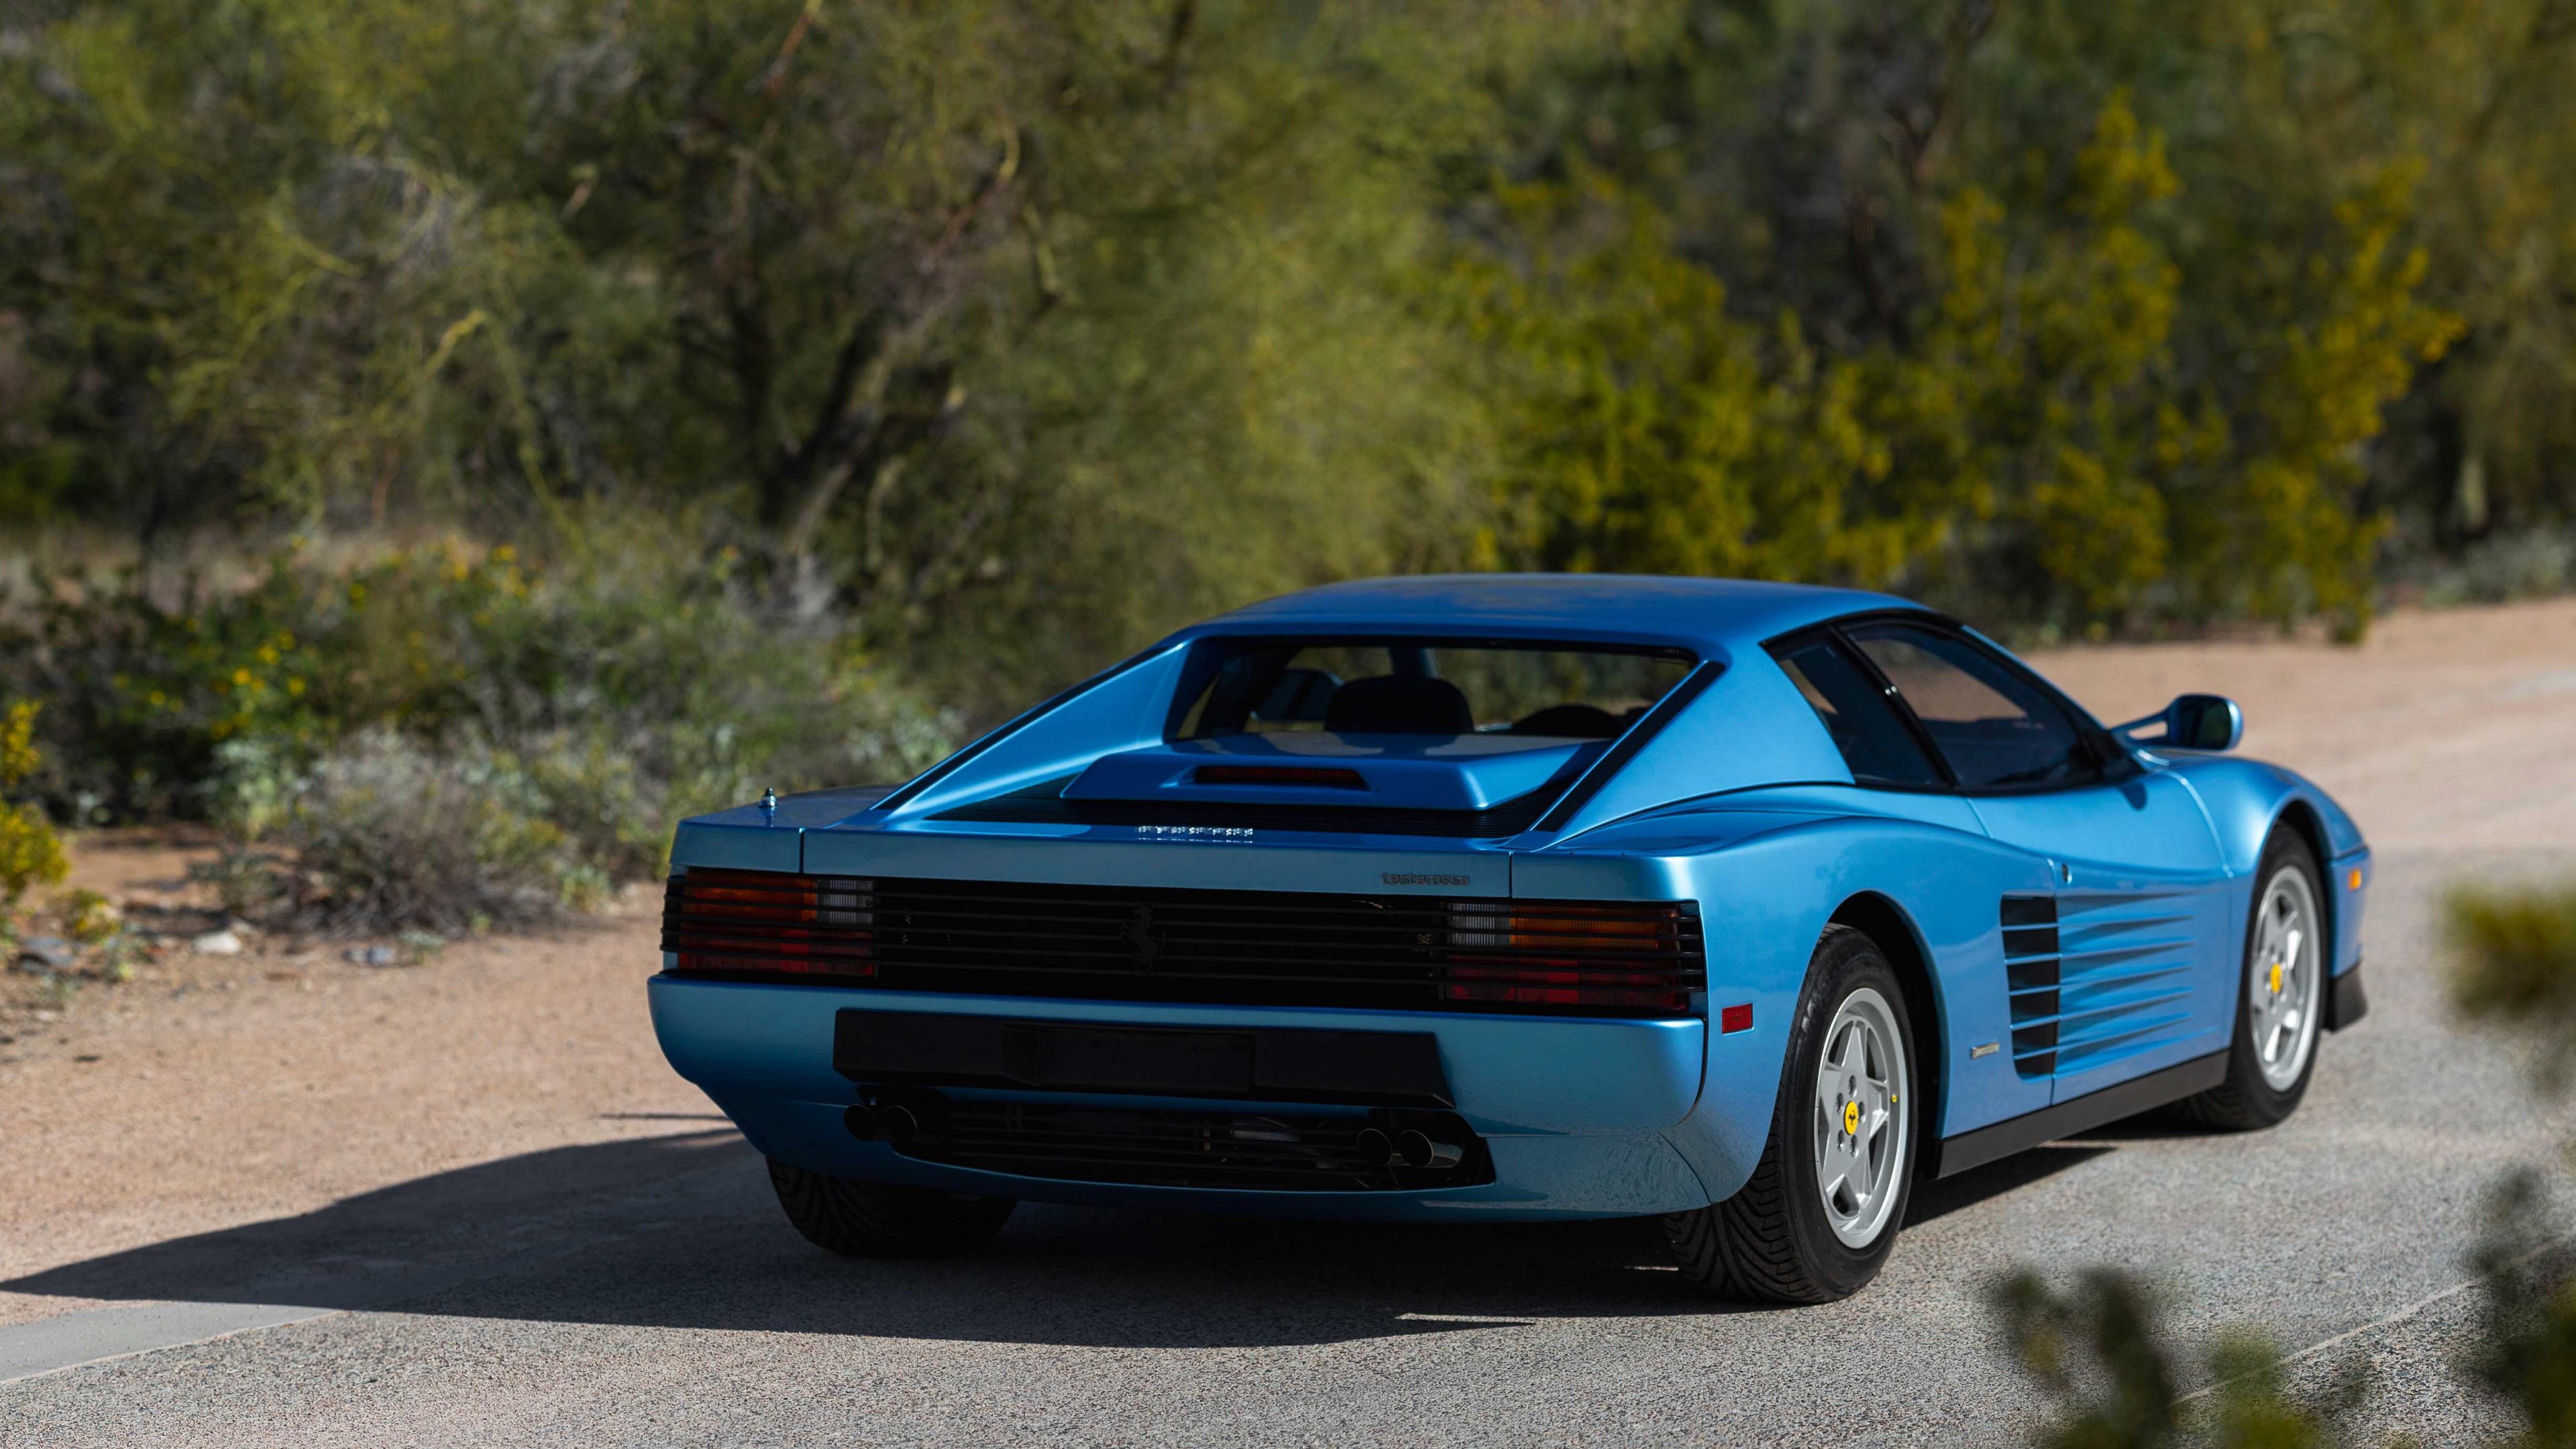 Ferrari Testarossa Blue Cars Italian Cars 80s Cars Car 3840x2160